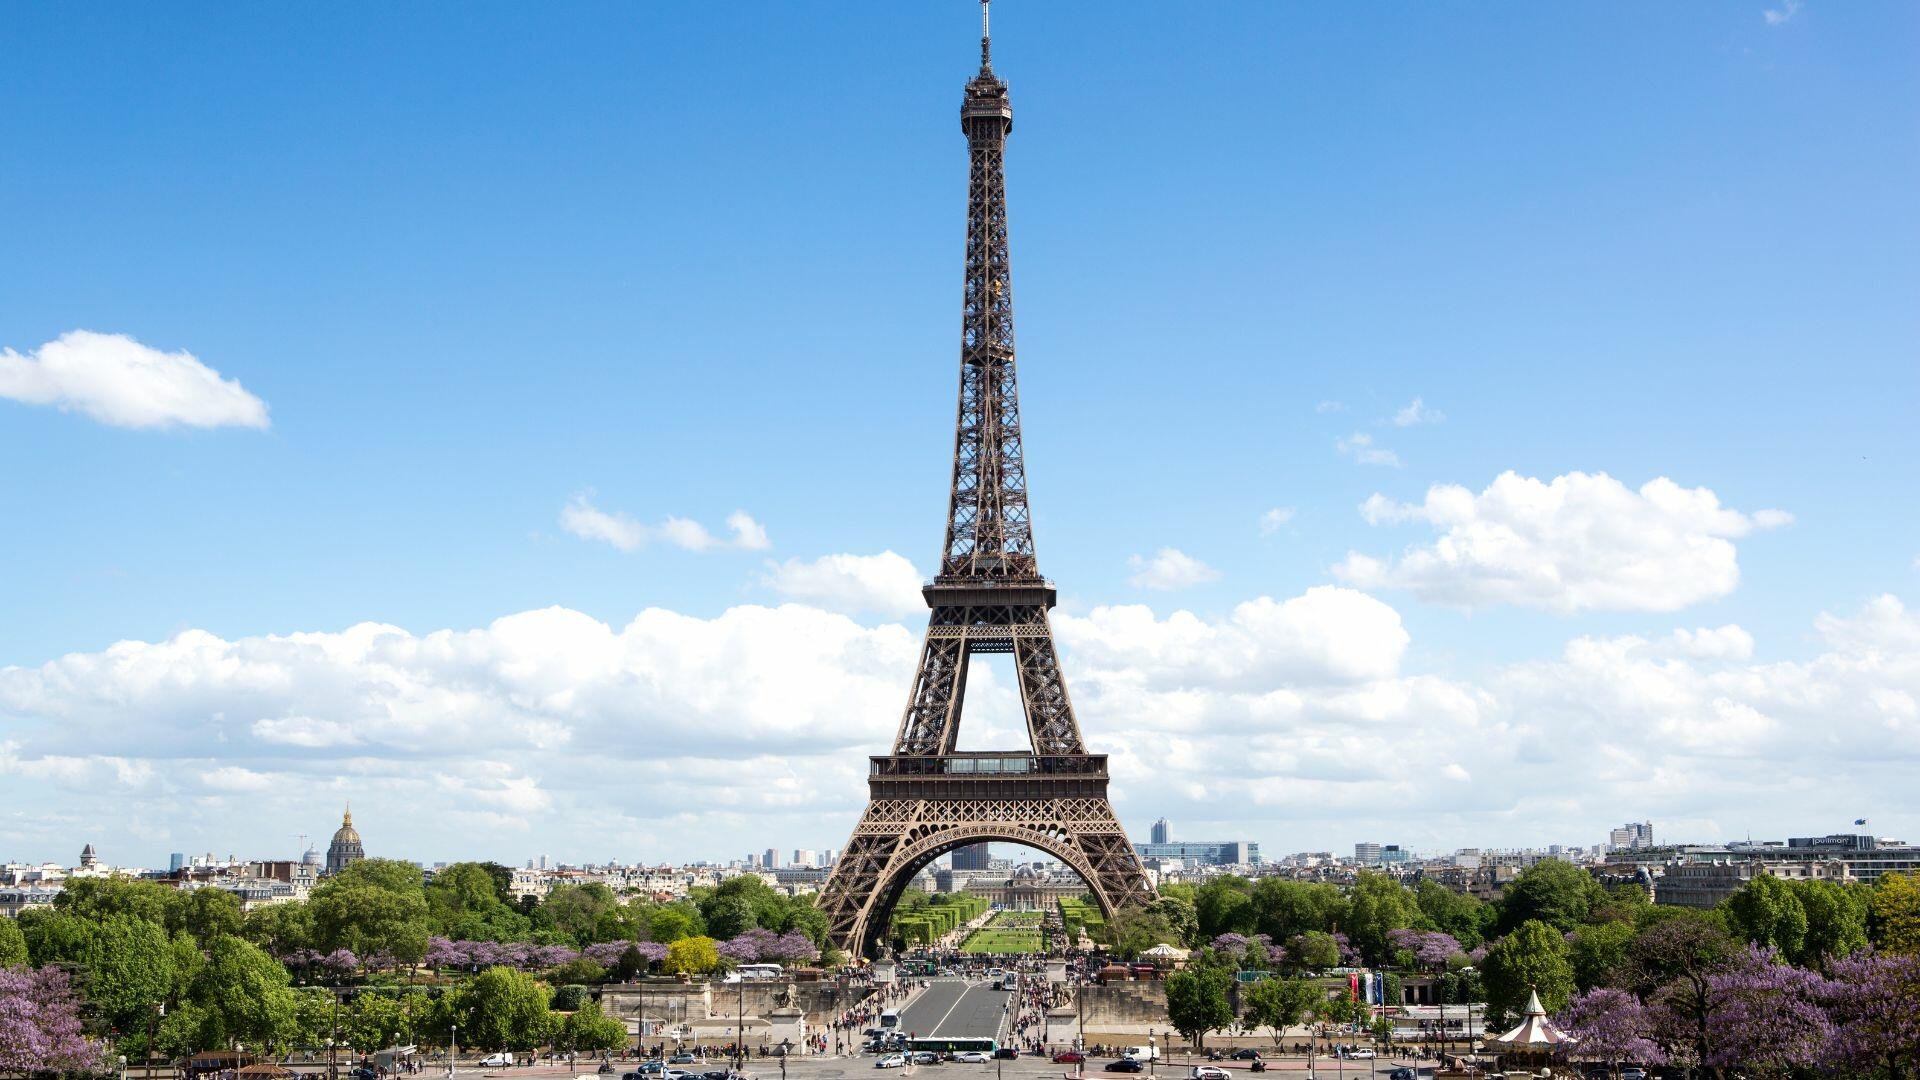 Франция ис. Трокадеро в Париже. Марсово поле Эйфелева башня Париж. Эйф. Детская башня в Париже.